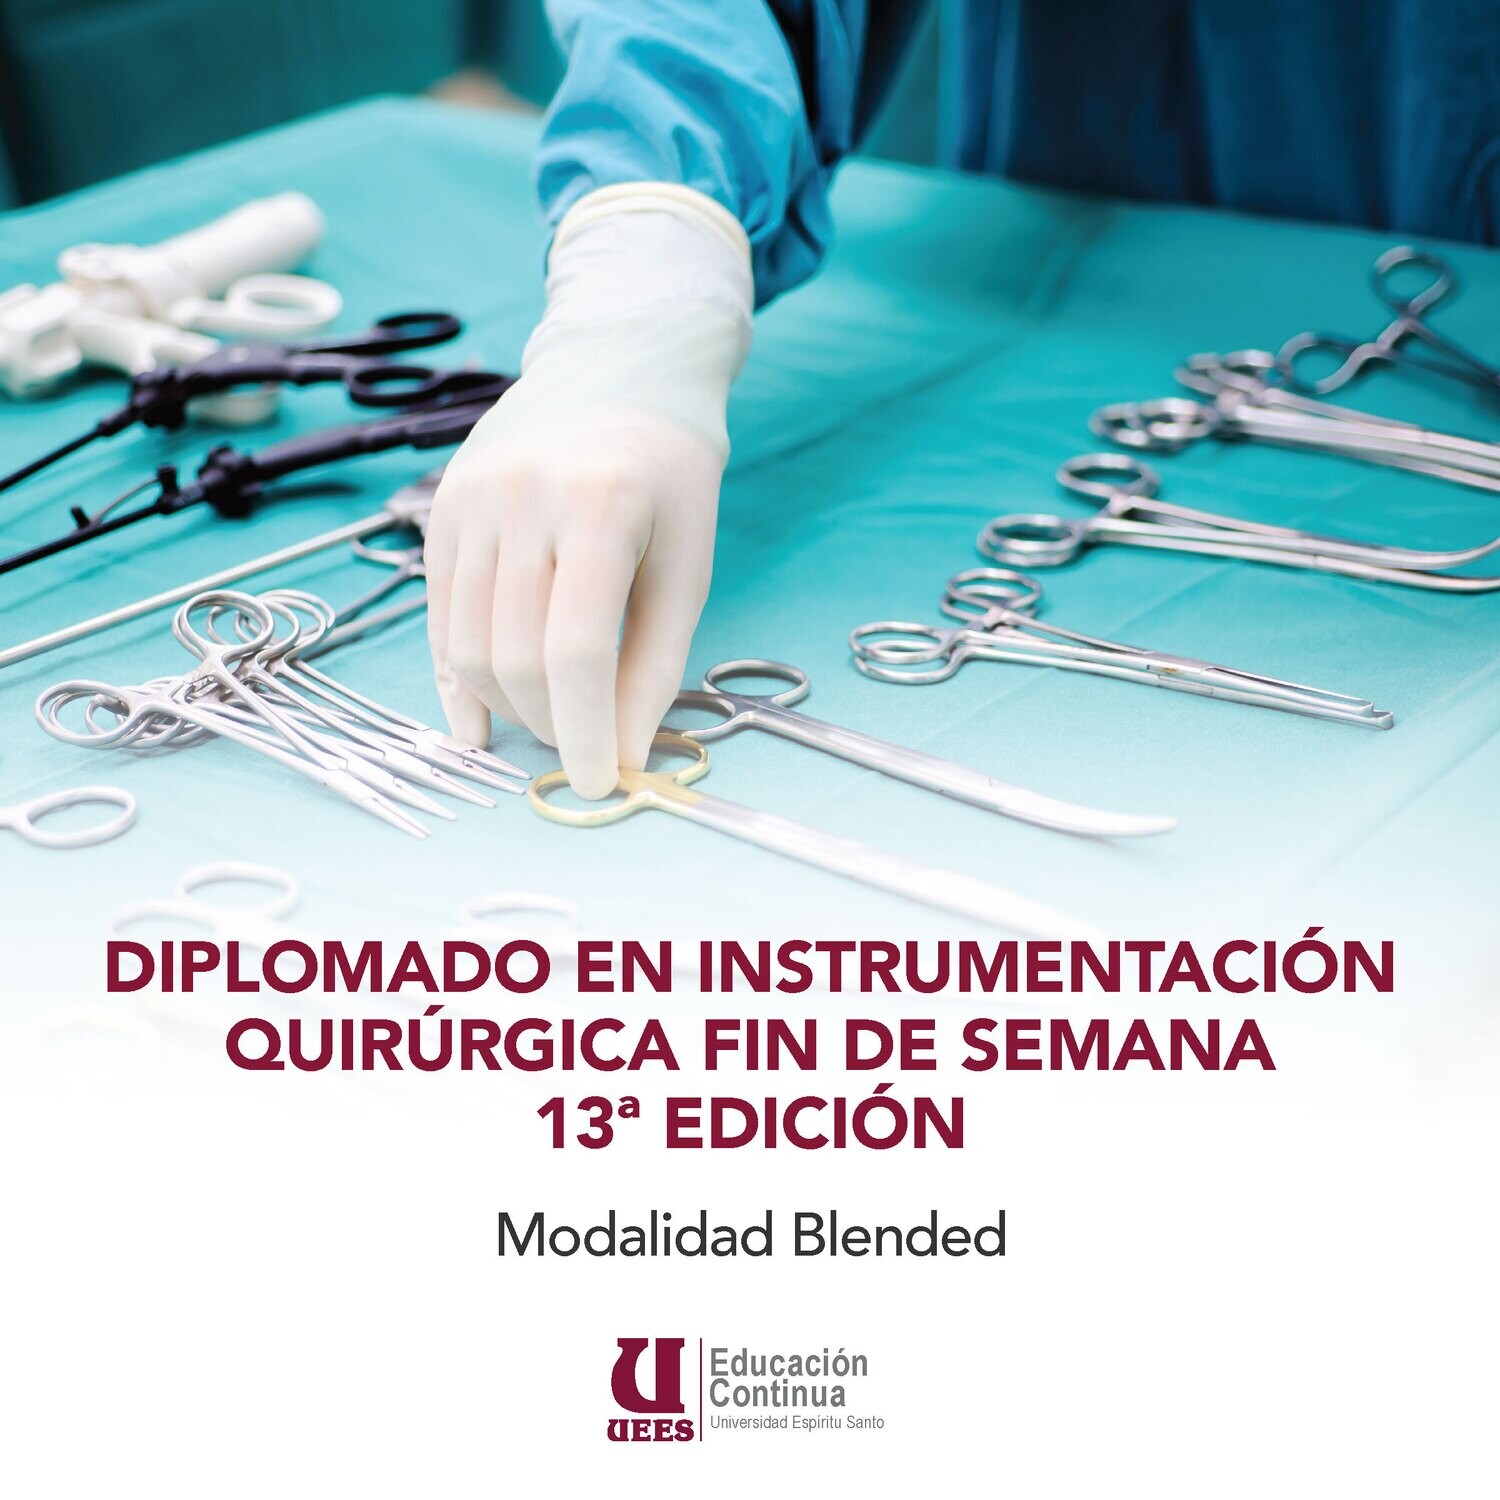 Diplomado de Instrumentación Quirúrgica 13ª edición